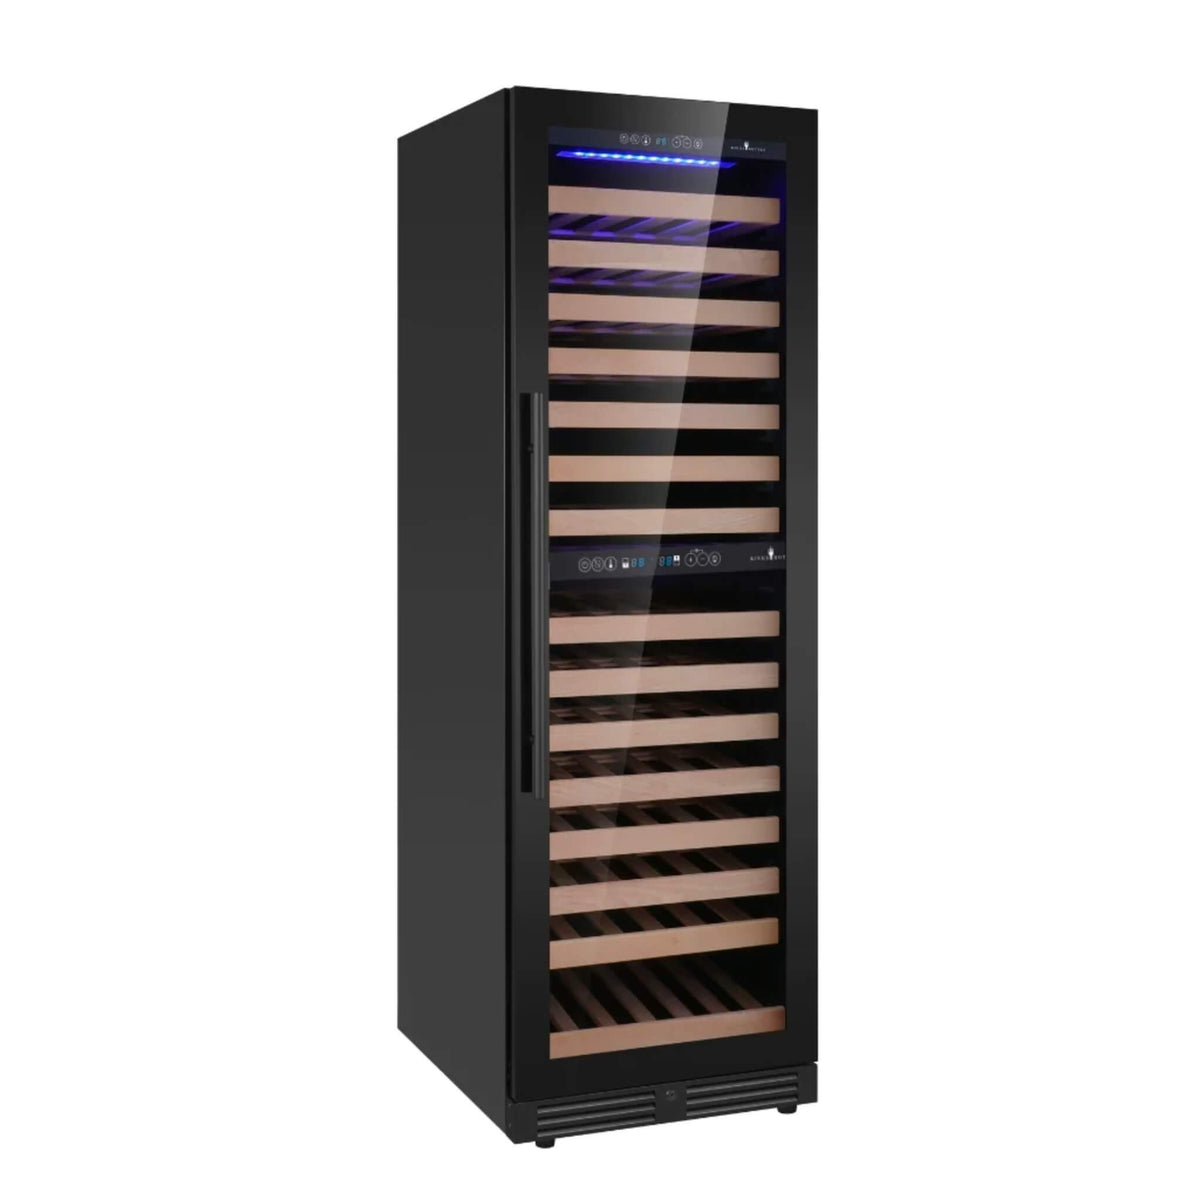 Kingsbottle Upright Low-E Glass Door Dual Zone Large Wine Cooler